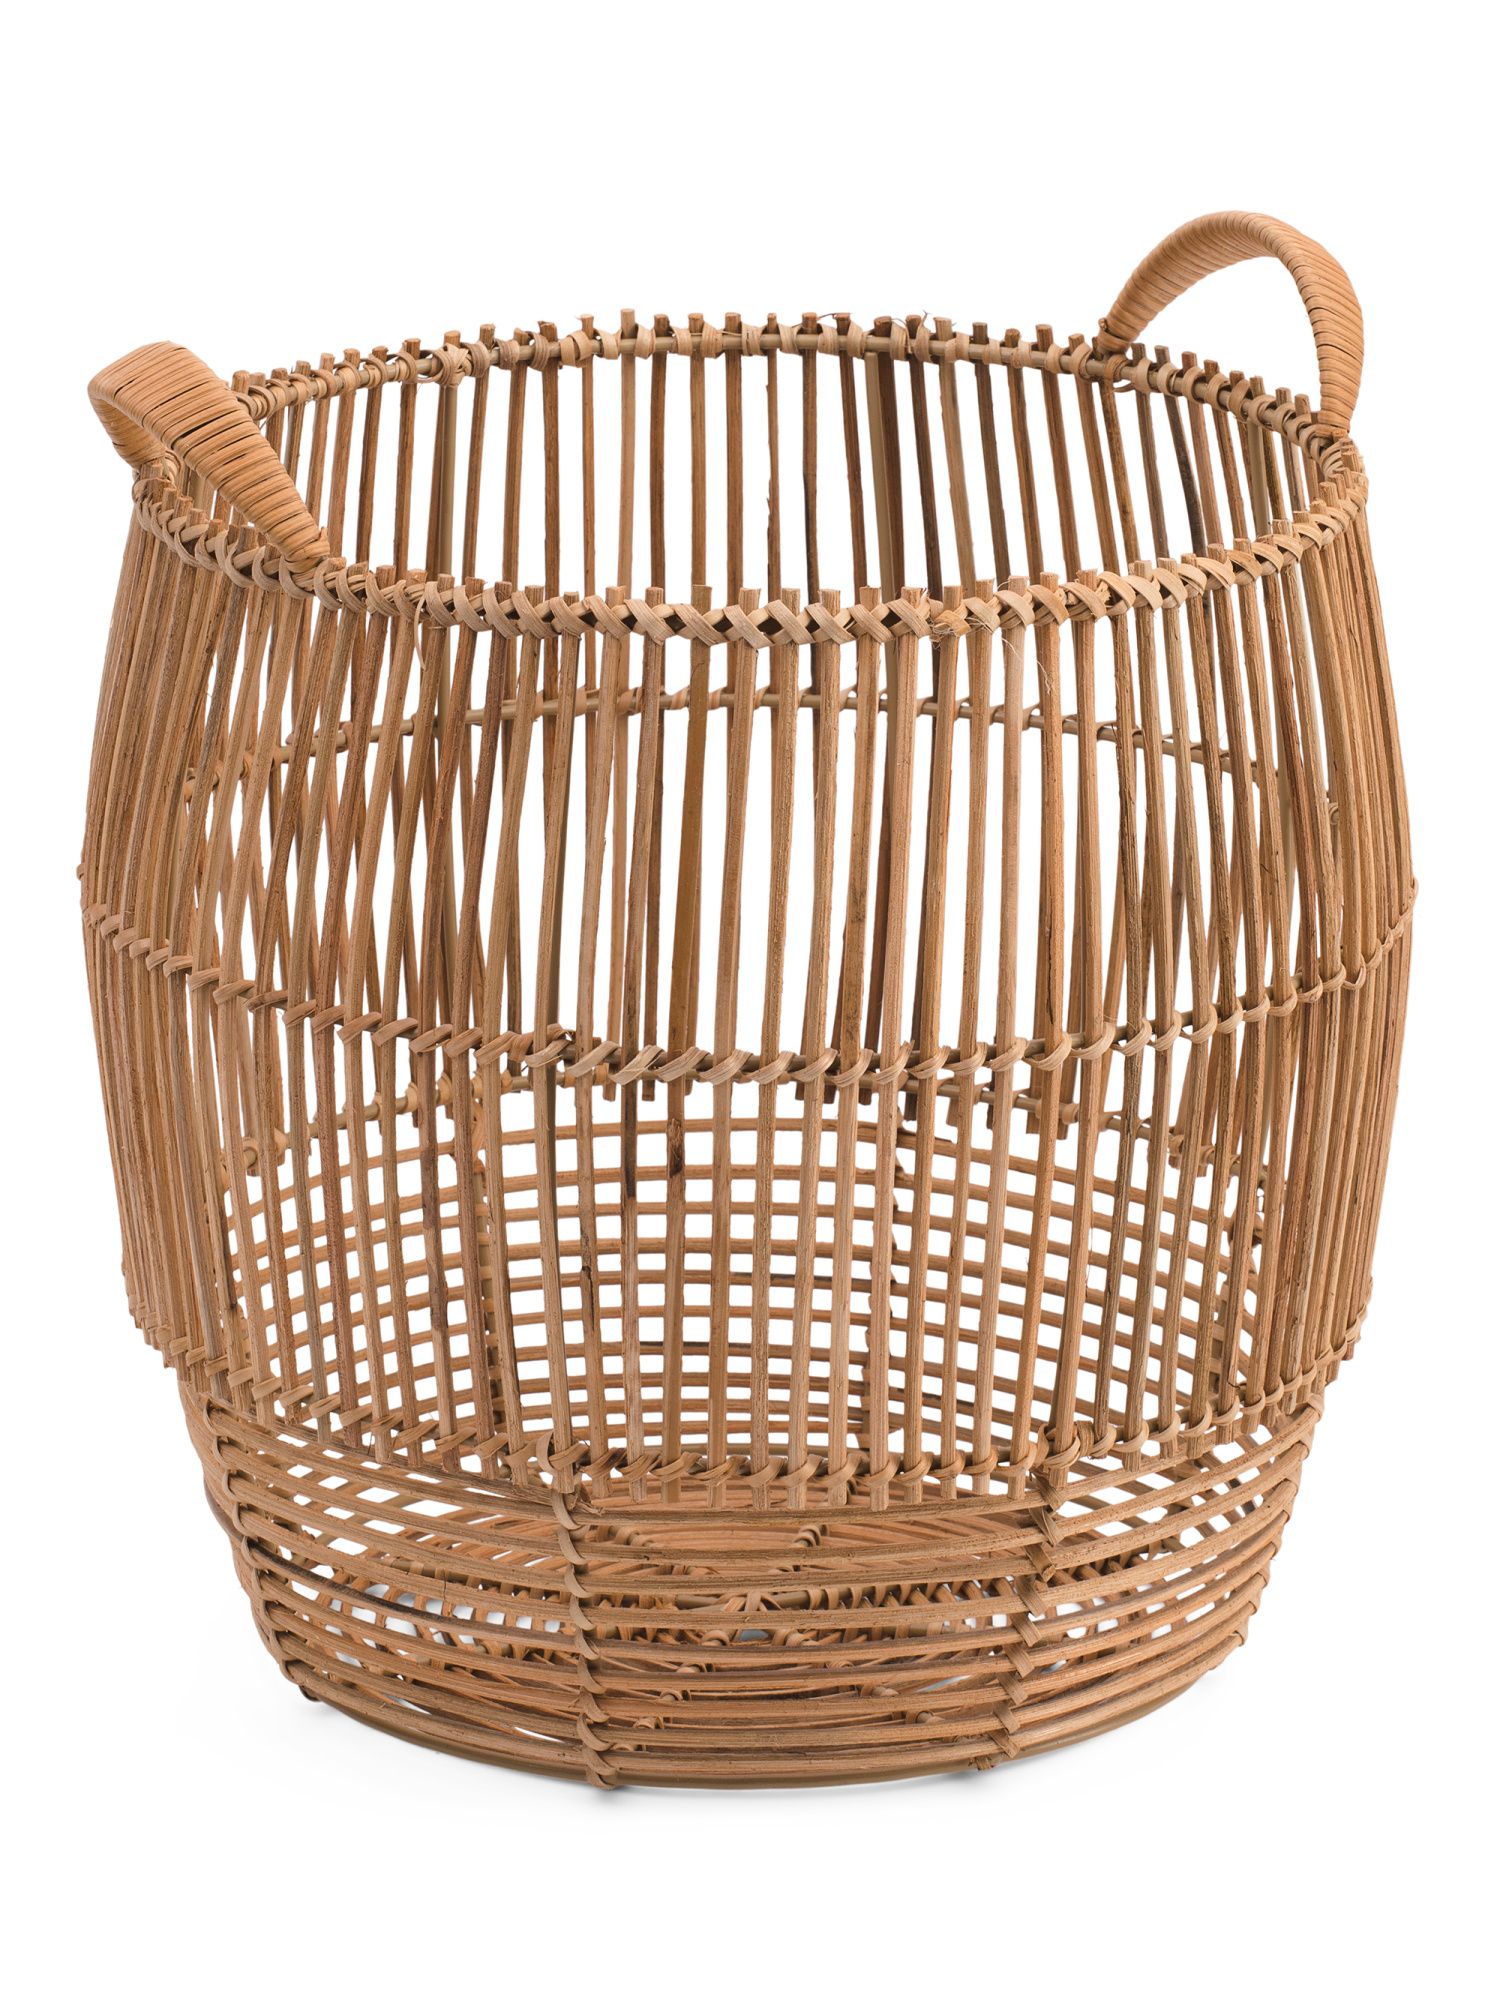 Rattan Storage Basket With Handles | TJ Maxx